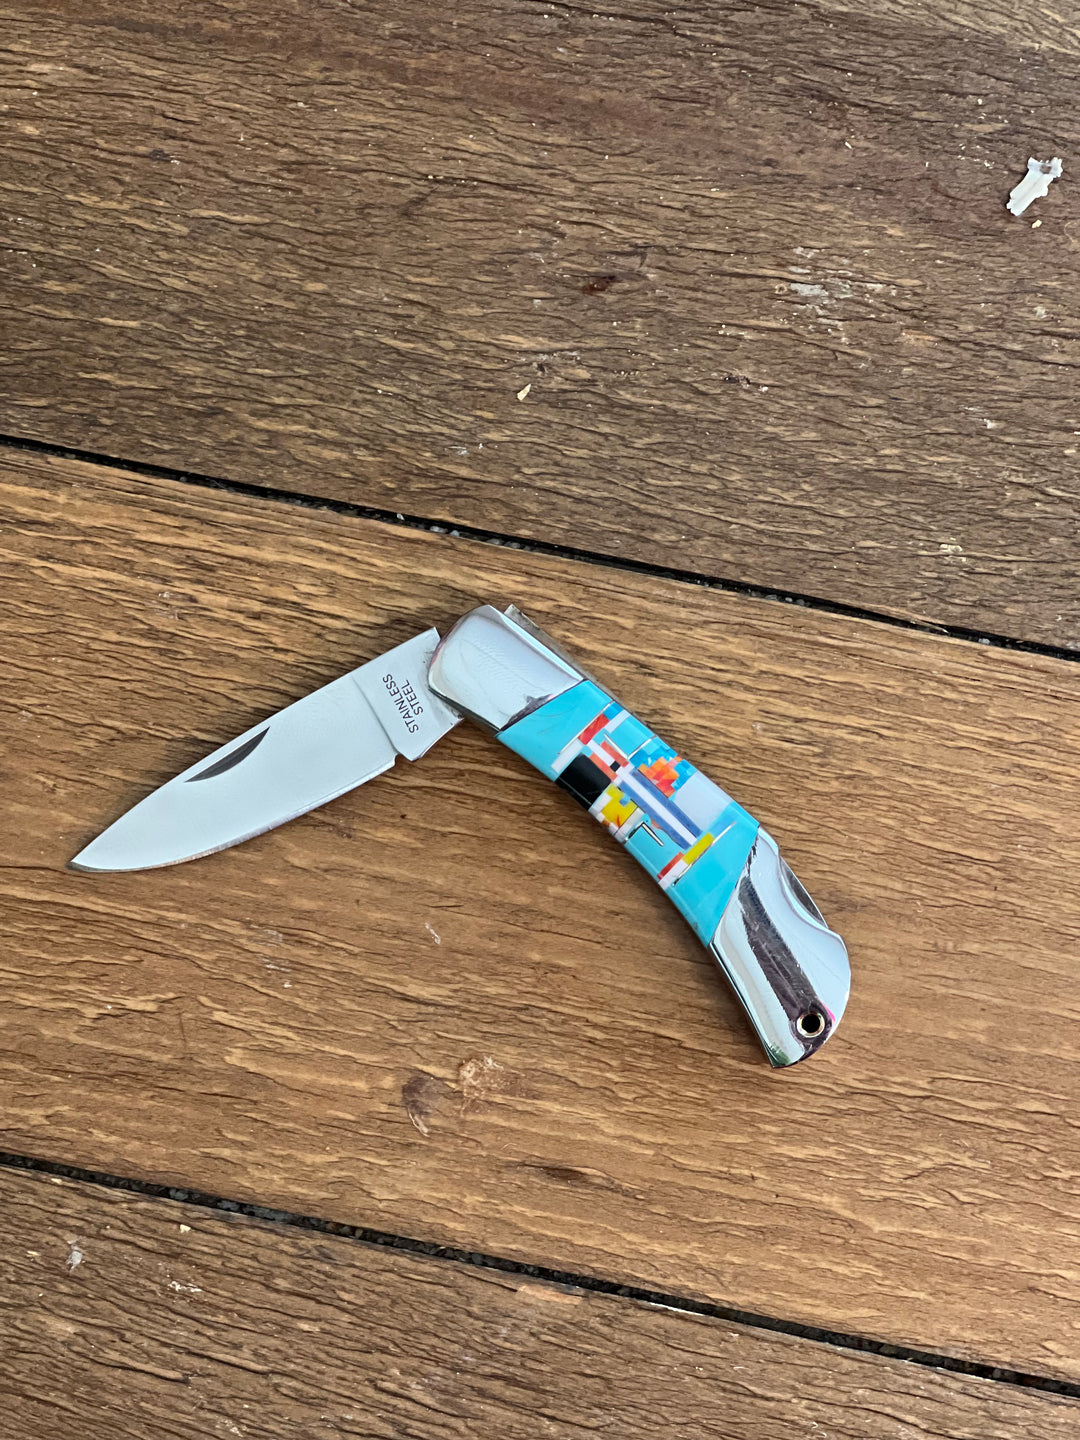 The Handy Cowboy Knife